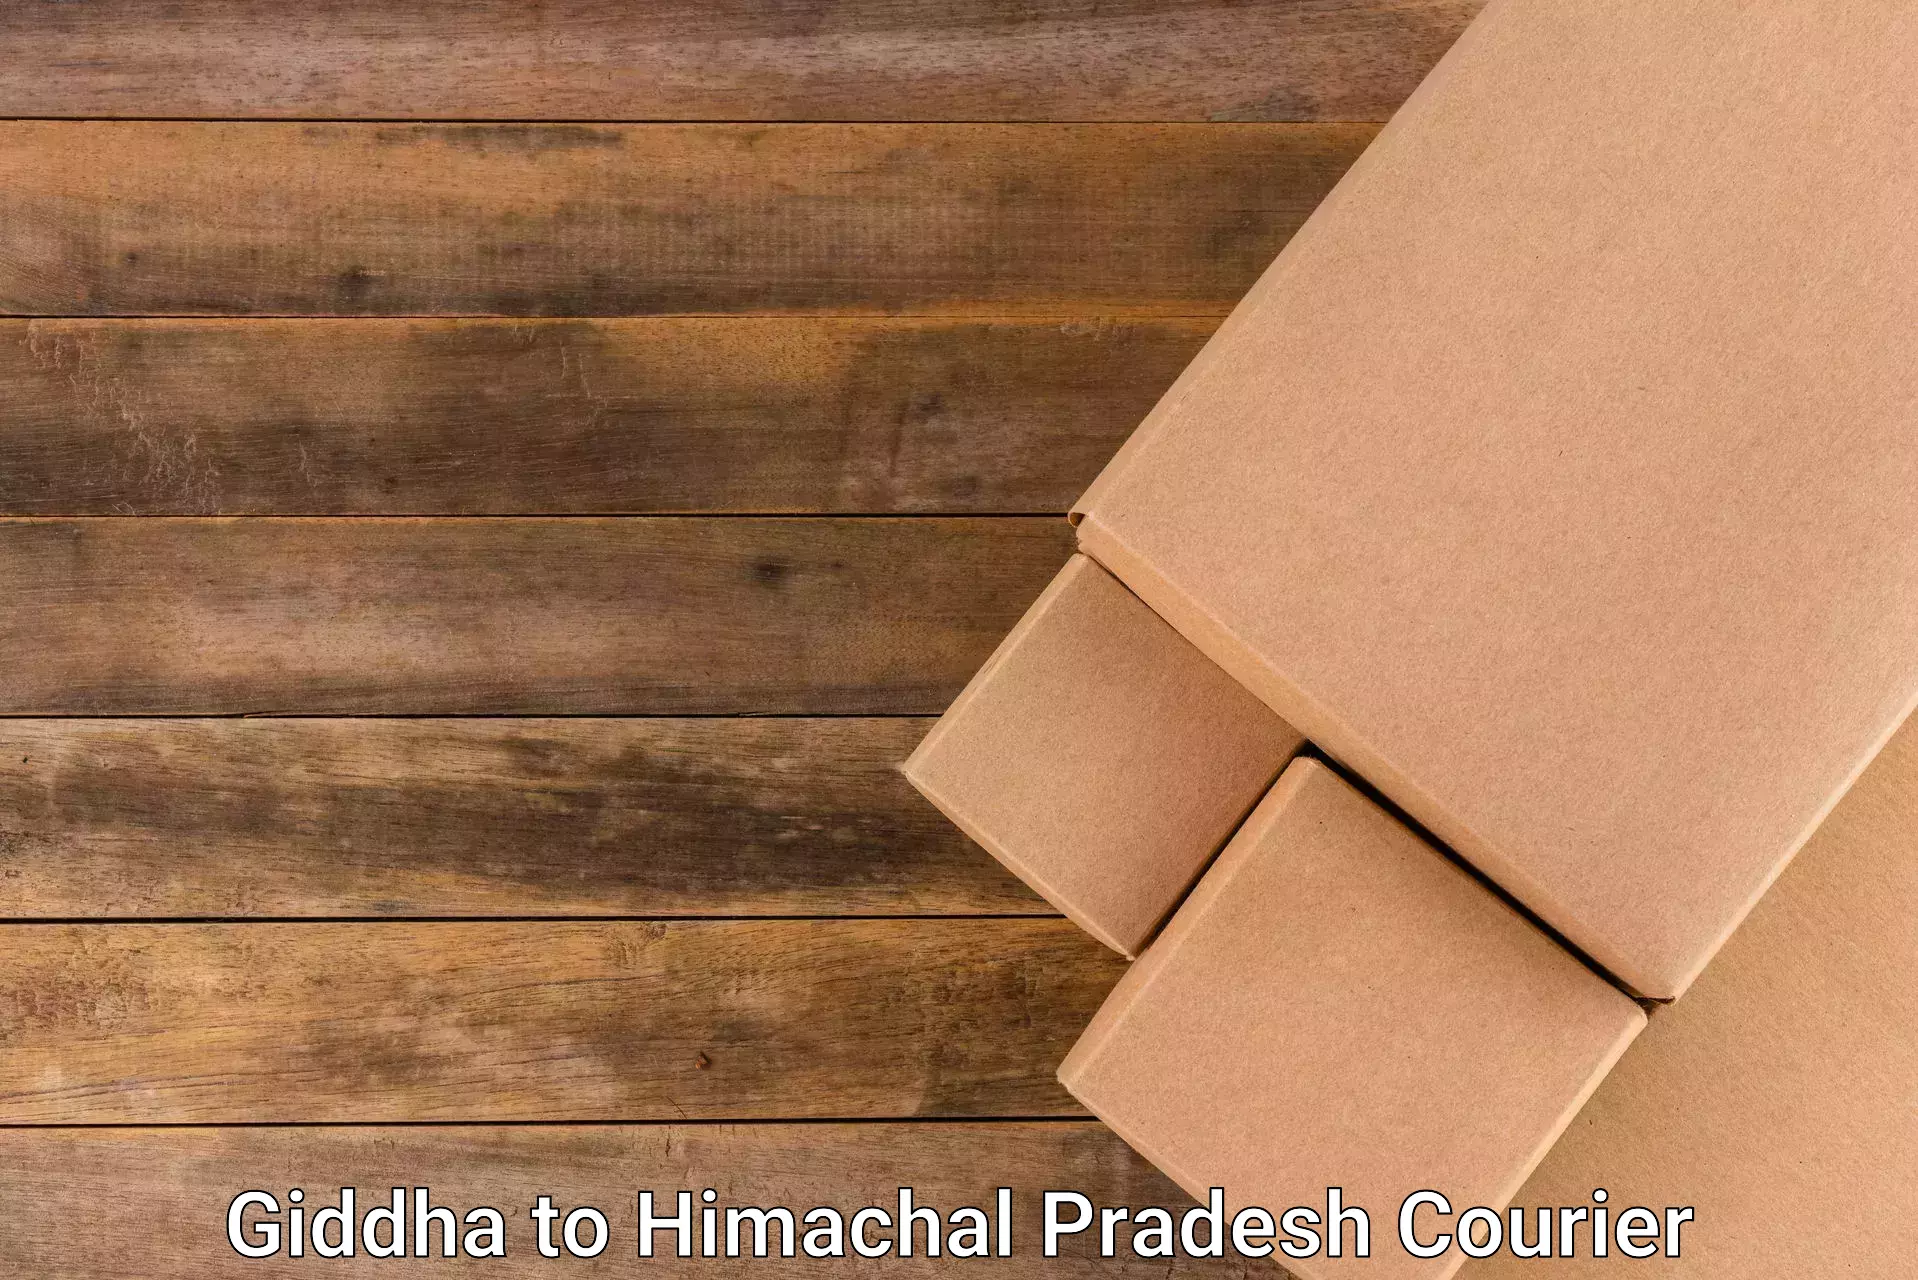 Courier service comparison Giddha to Himachal Pradesh